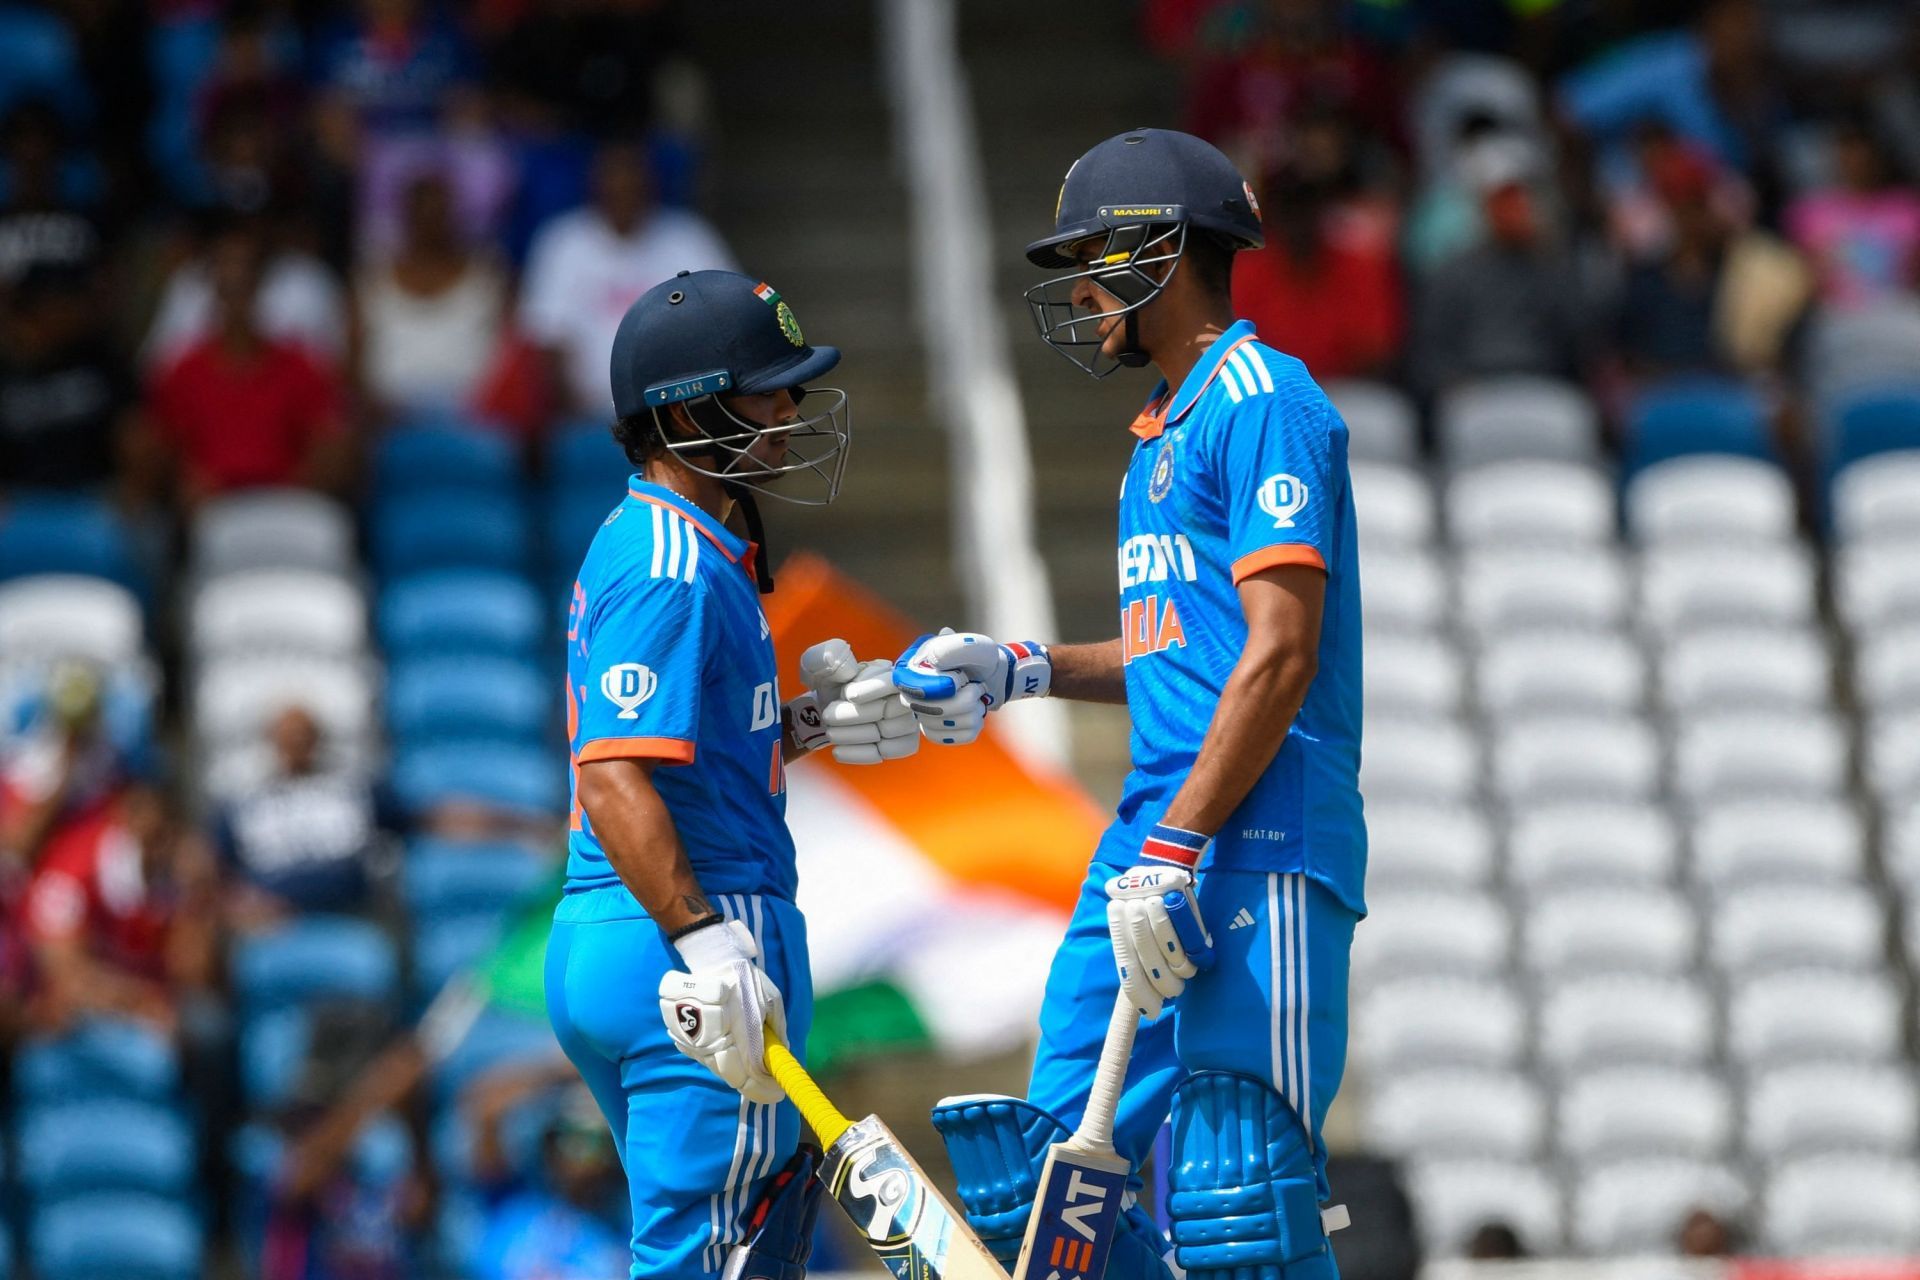 Ishan Kishan and Shubman Gill strung together a 143-run opening-wicket partnership. [P/C: BCCI]